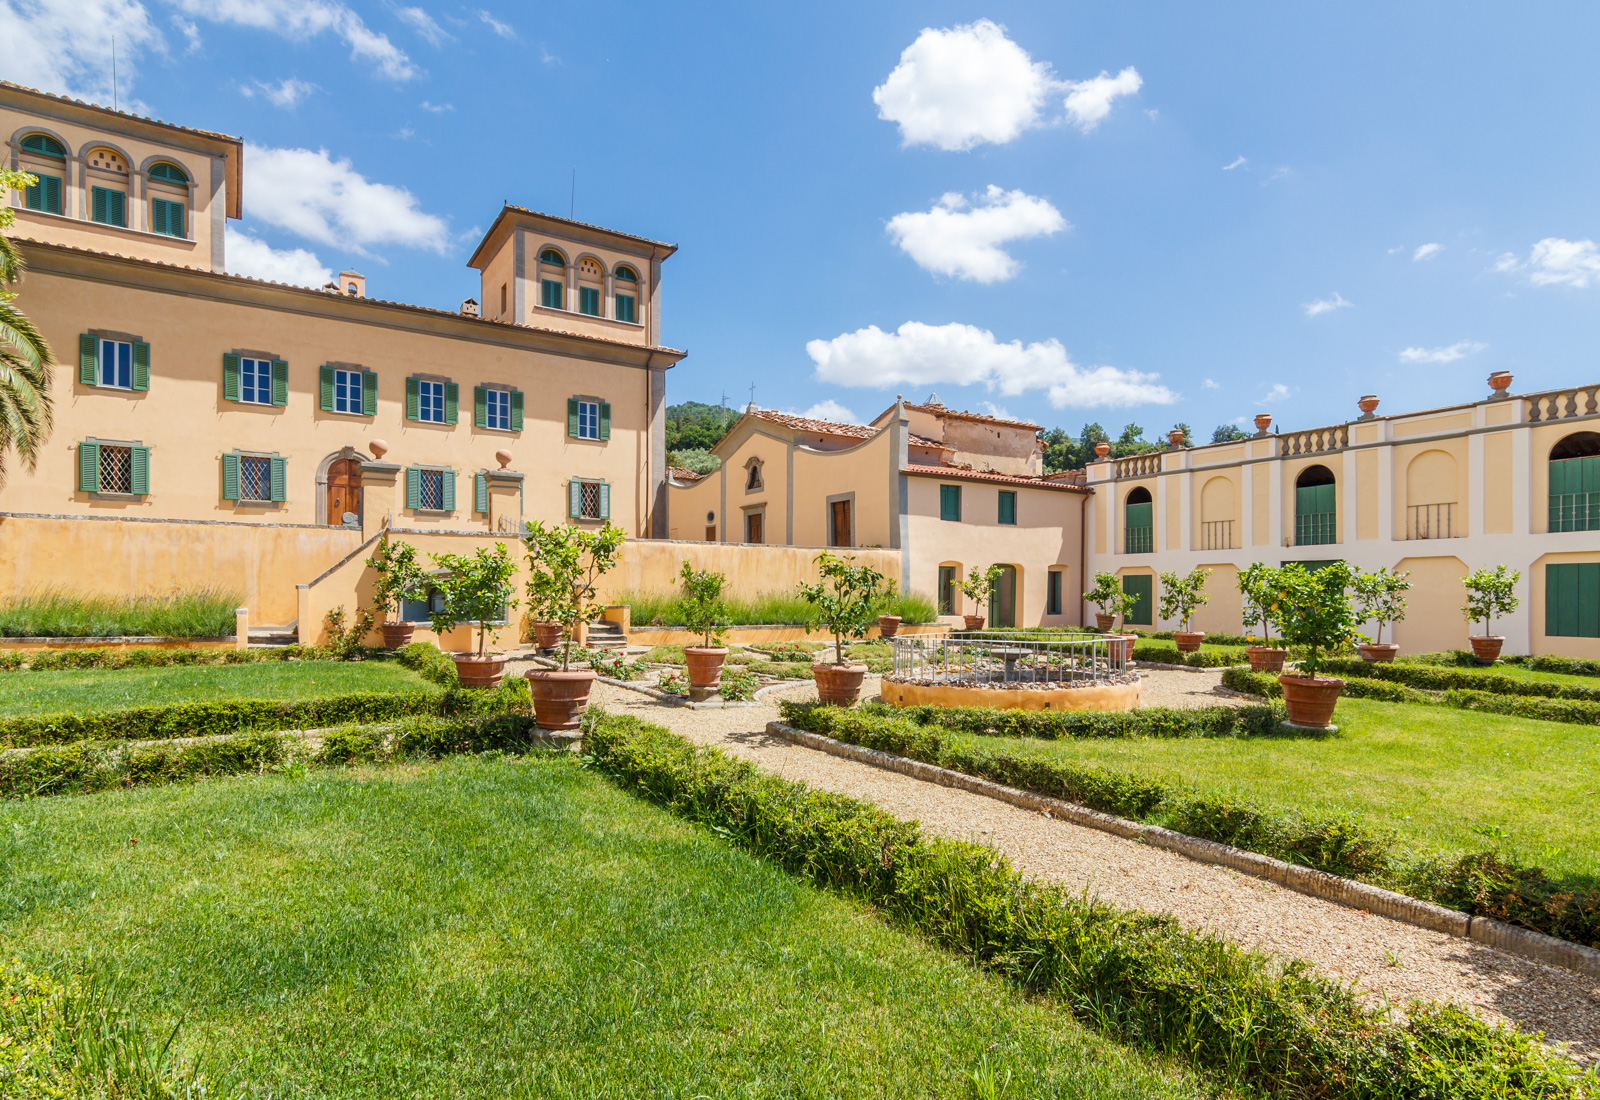 Villa Historical Noble Wine Estate Vinci - Florence, Tuscany for sale For Super Rich